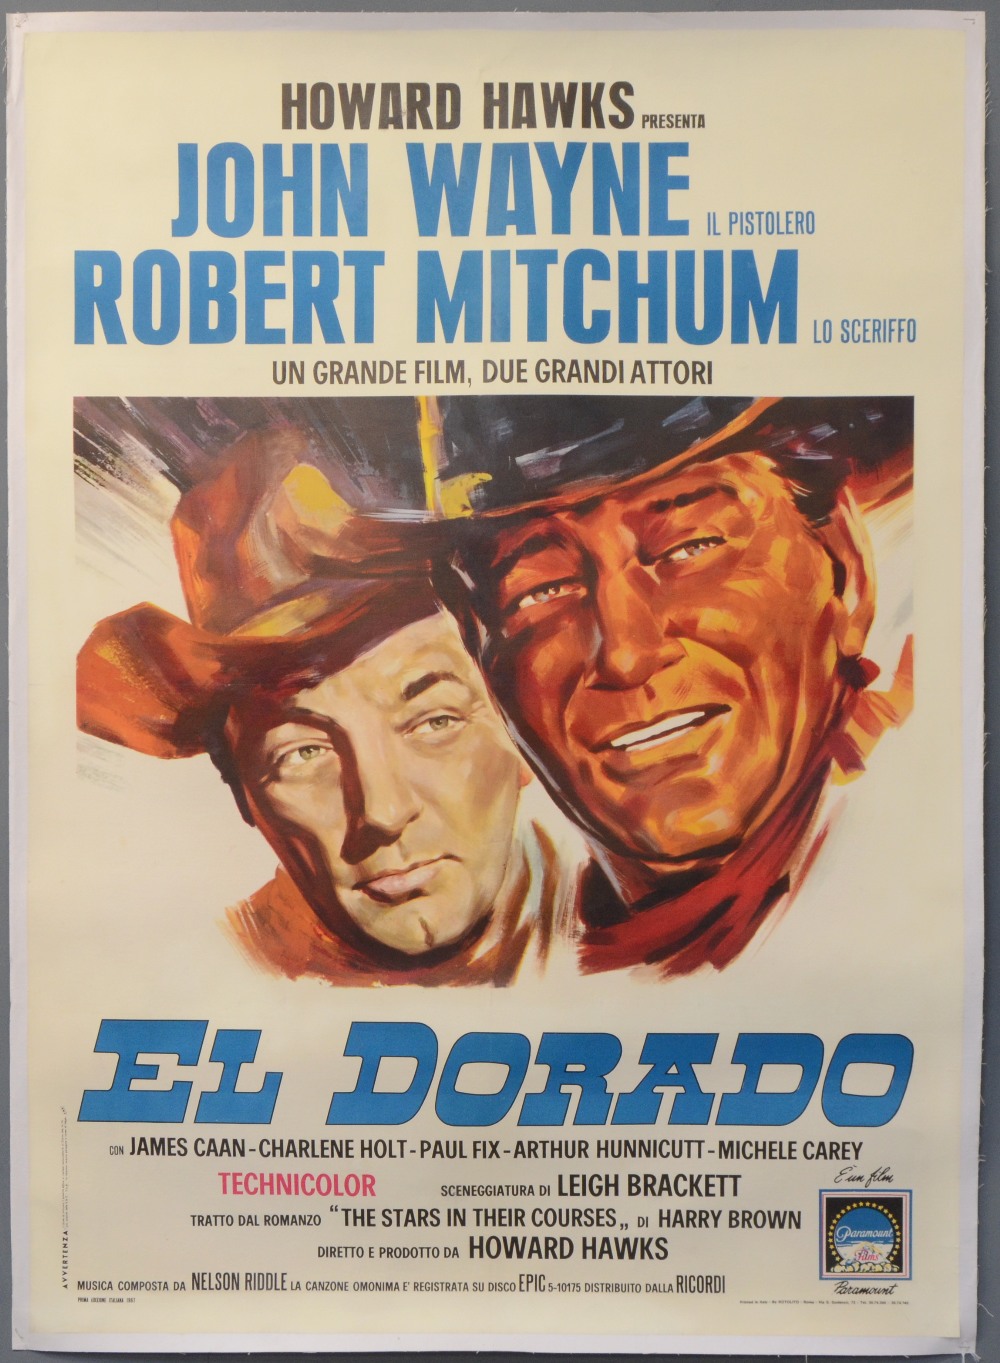 El Dorado (1967) Italian 2 Foglio film poster, western starring John Wayne, Robert Mitchum, - Image 4 of 4